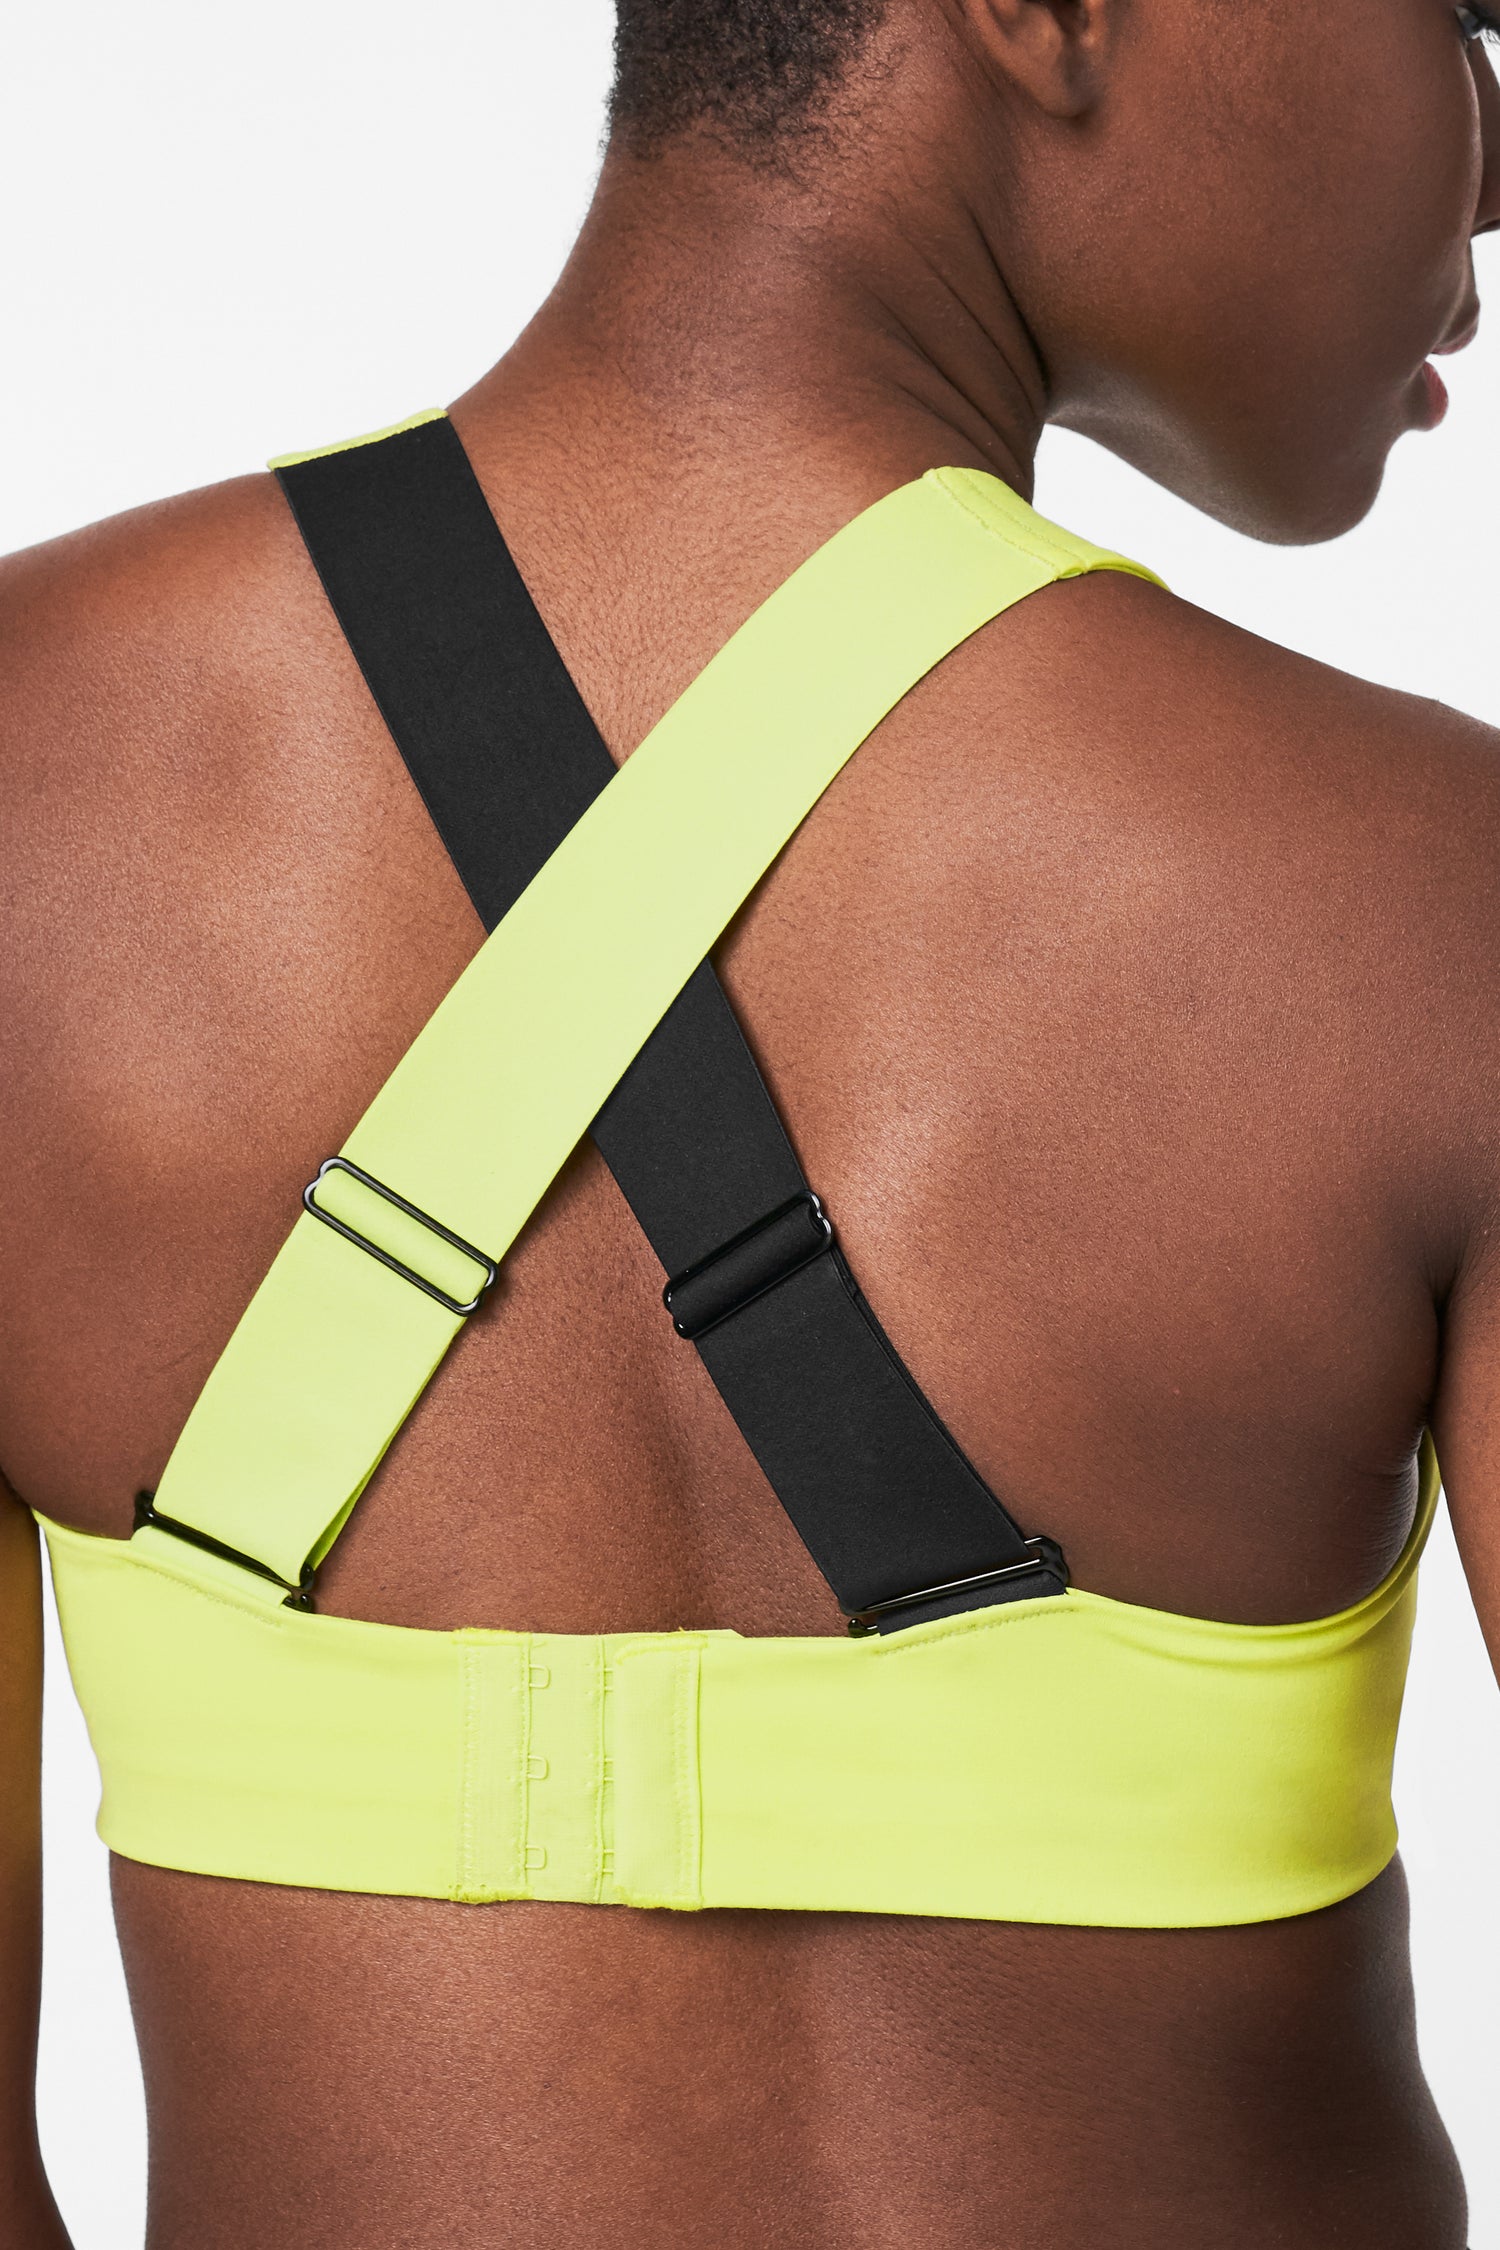 Top Multi Strap sports bra with front sheer mesh @pantiesforher